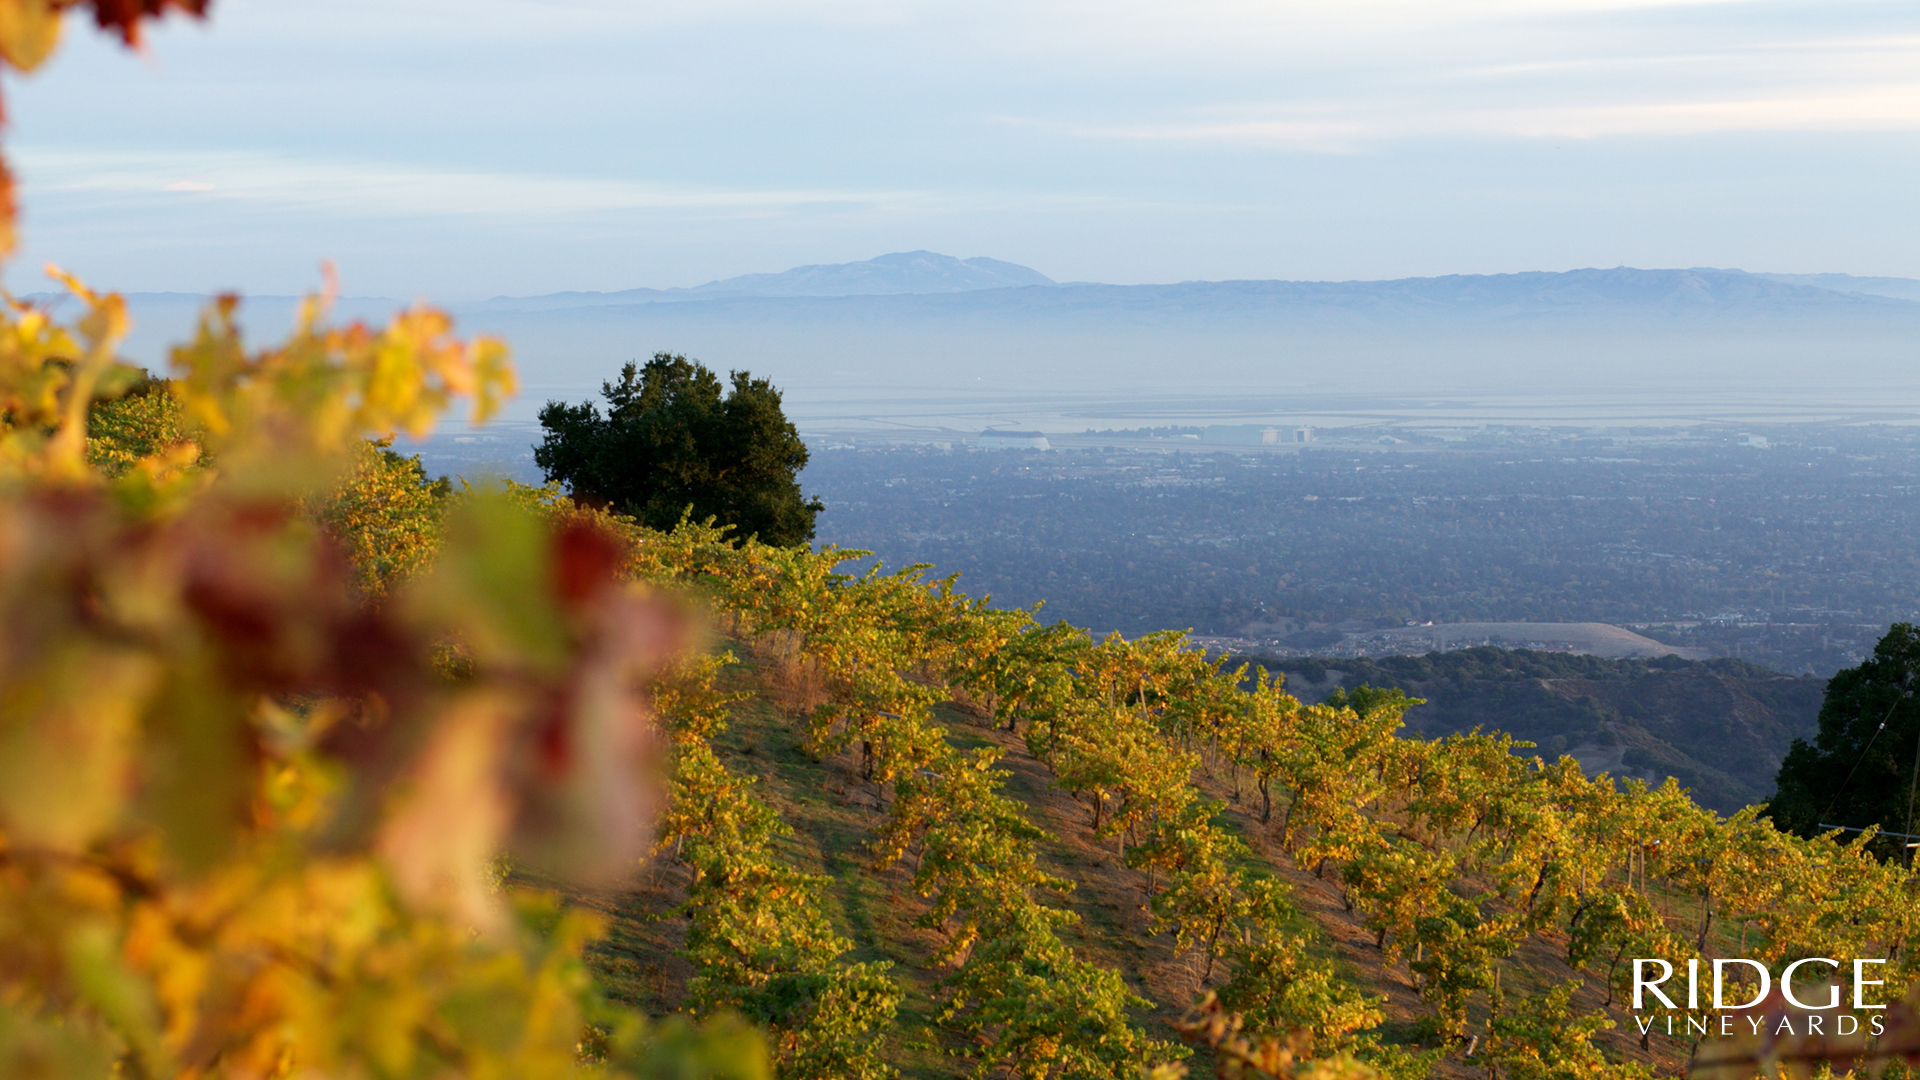 Monte Bello Vineyard as a Ridge Vineyards Zoom Background.